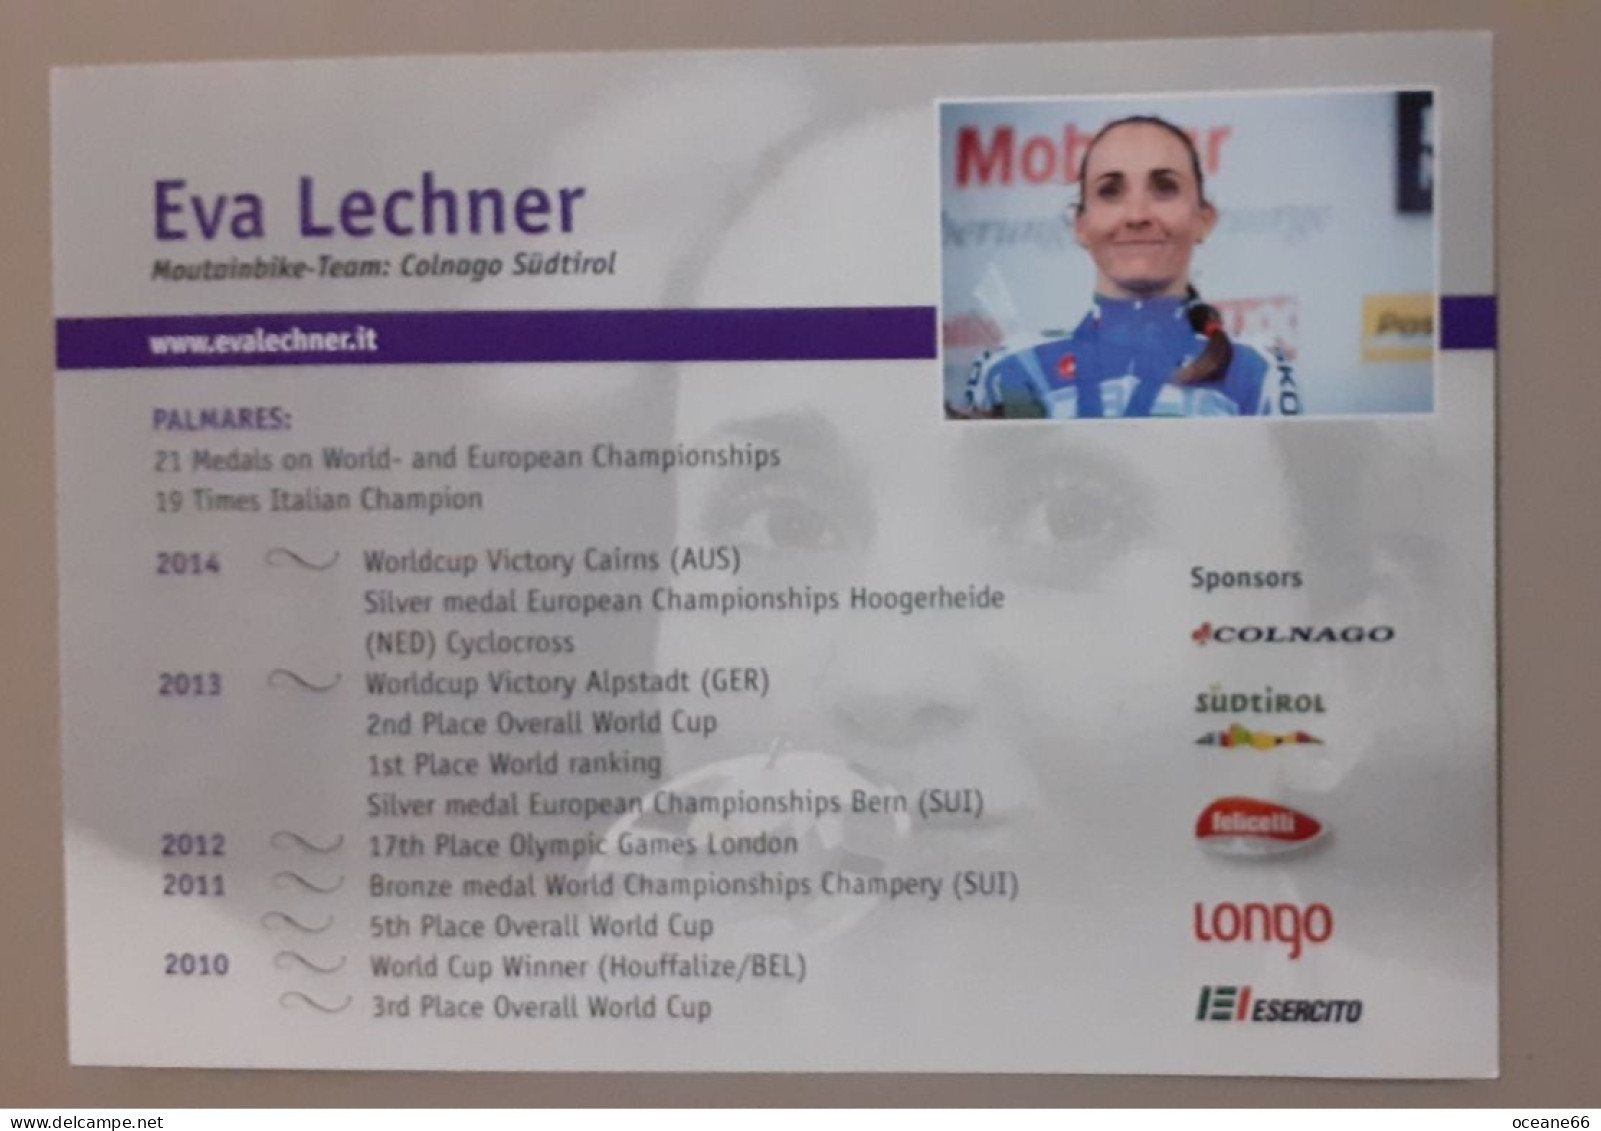 Autographe Eva Lechner Colnago Format A5ppp - Ciclismo